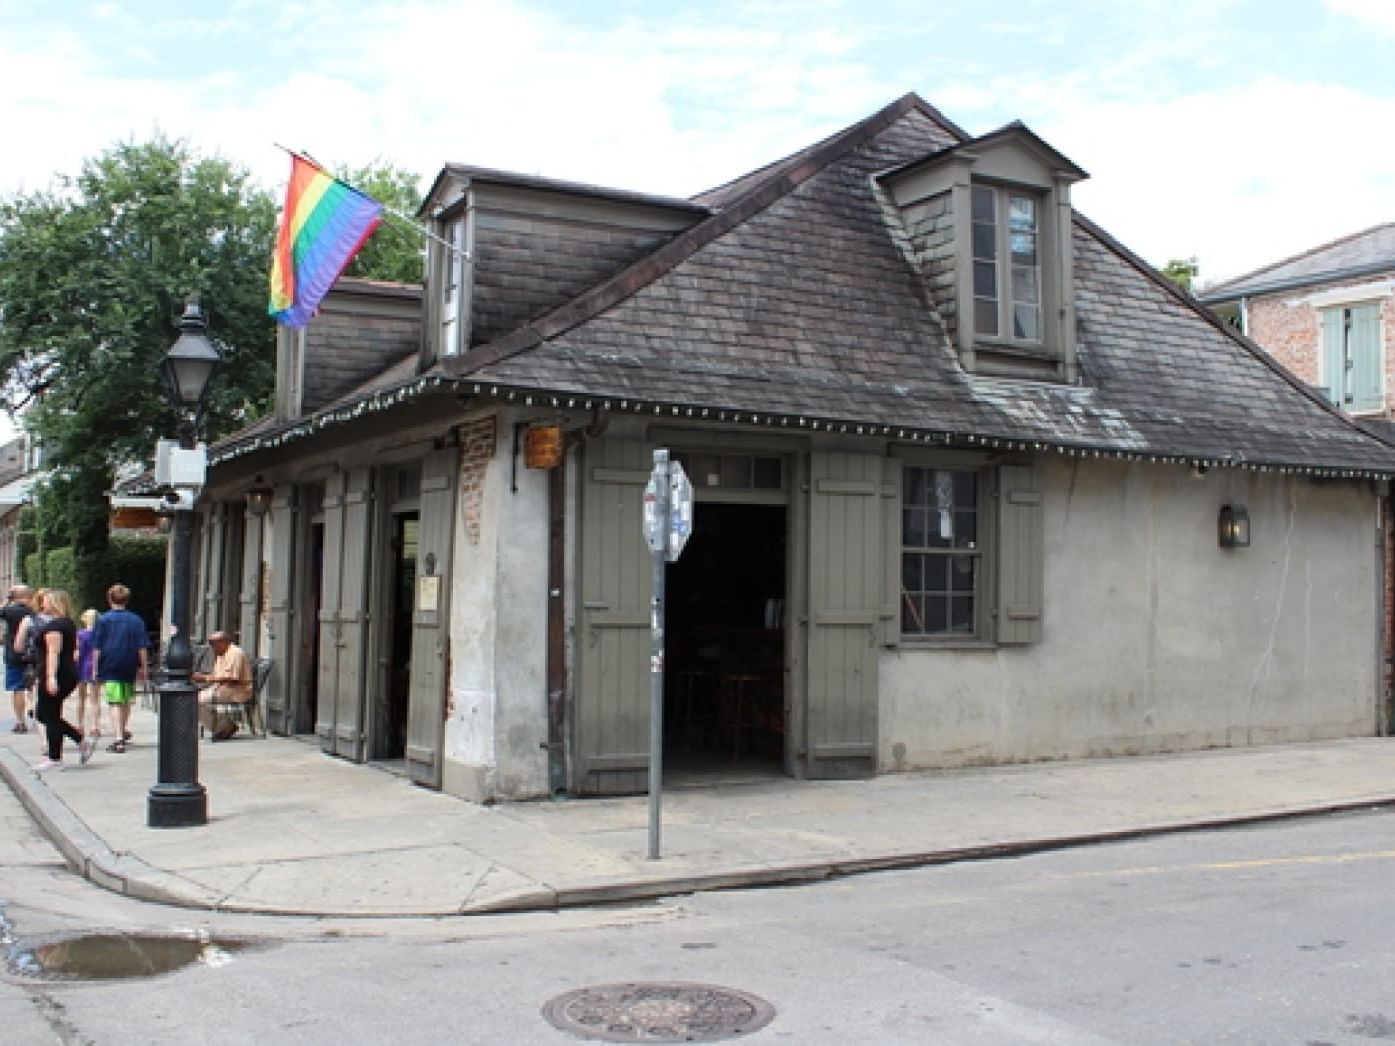 The Lafitte's Blacksmith Shop & Bar near La Galerie Hotel